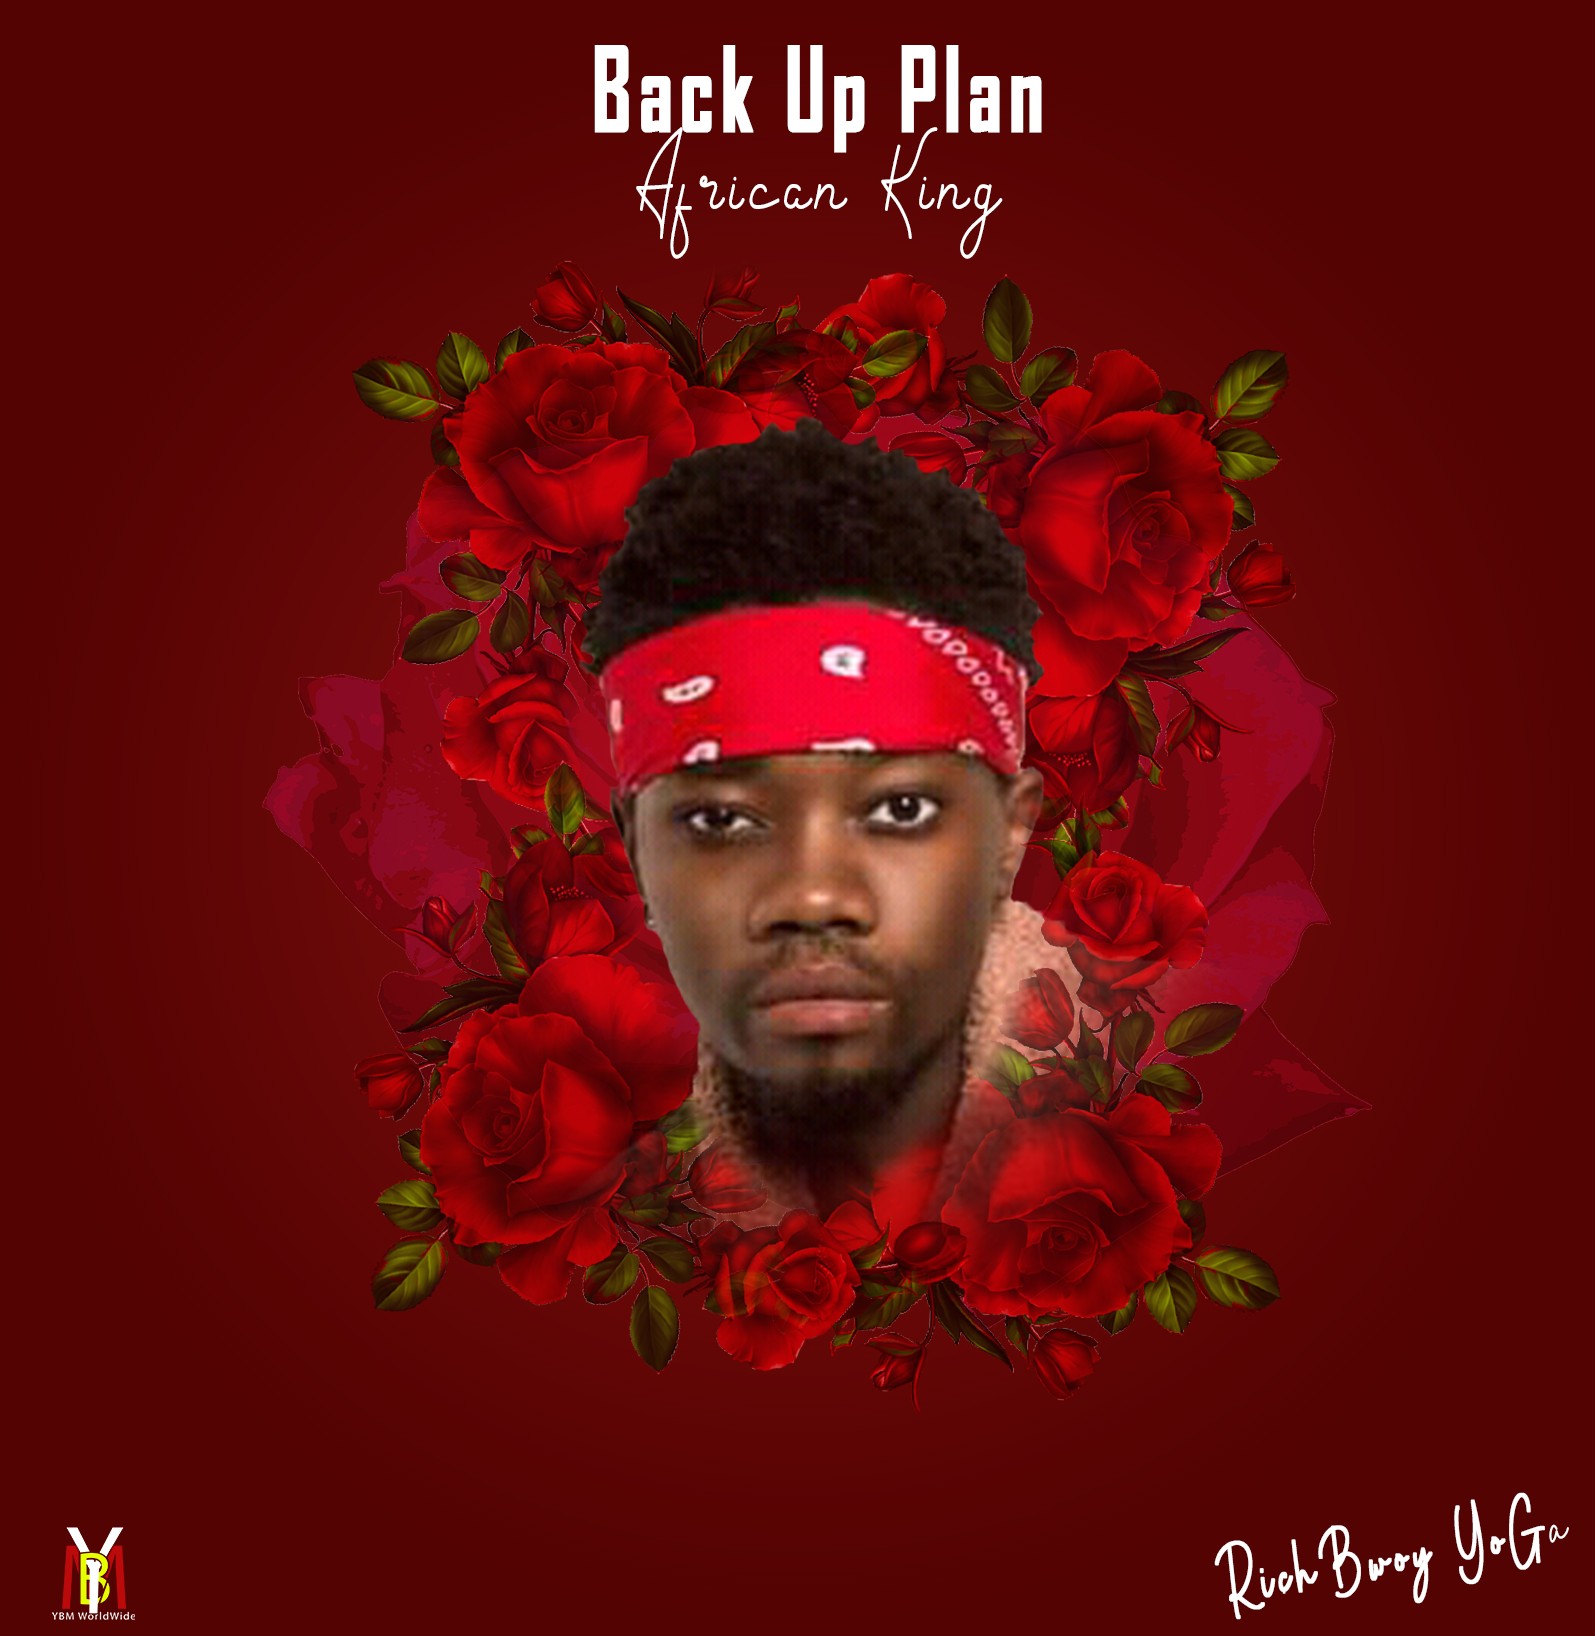 Back up Plan by RichBwoy YoGa | Album